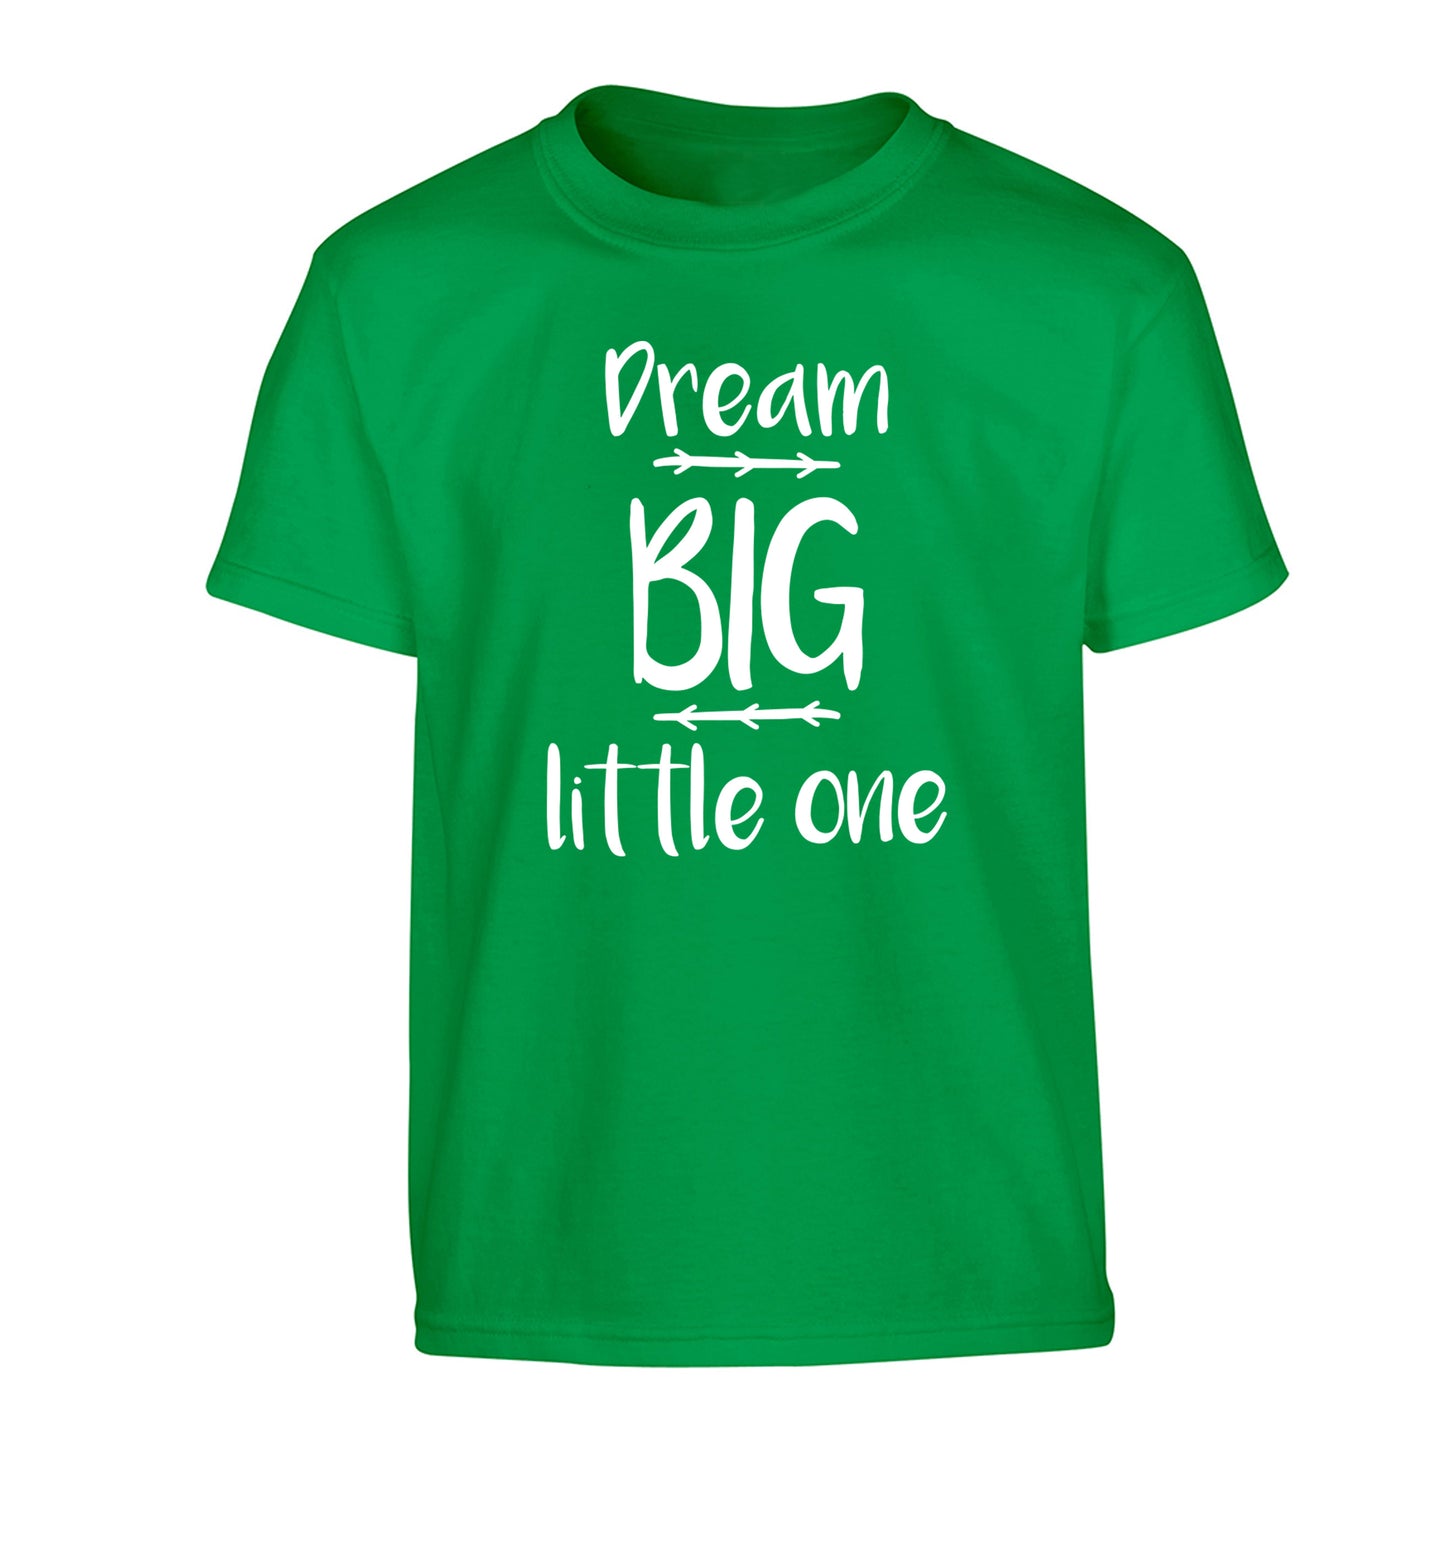 Dream big little one Children's green Tshirt 12-14 Years